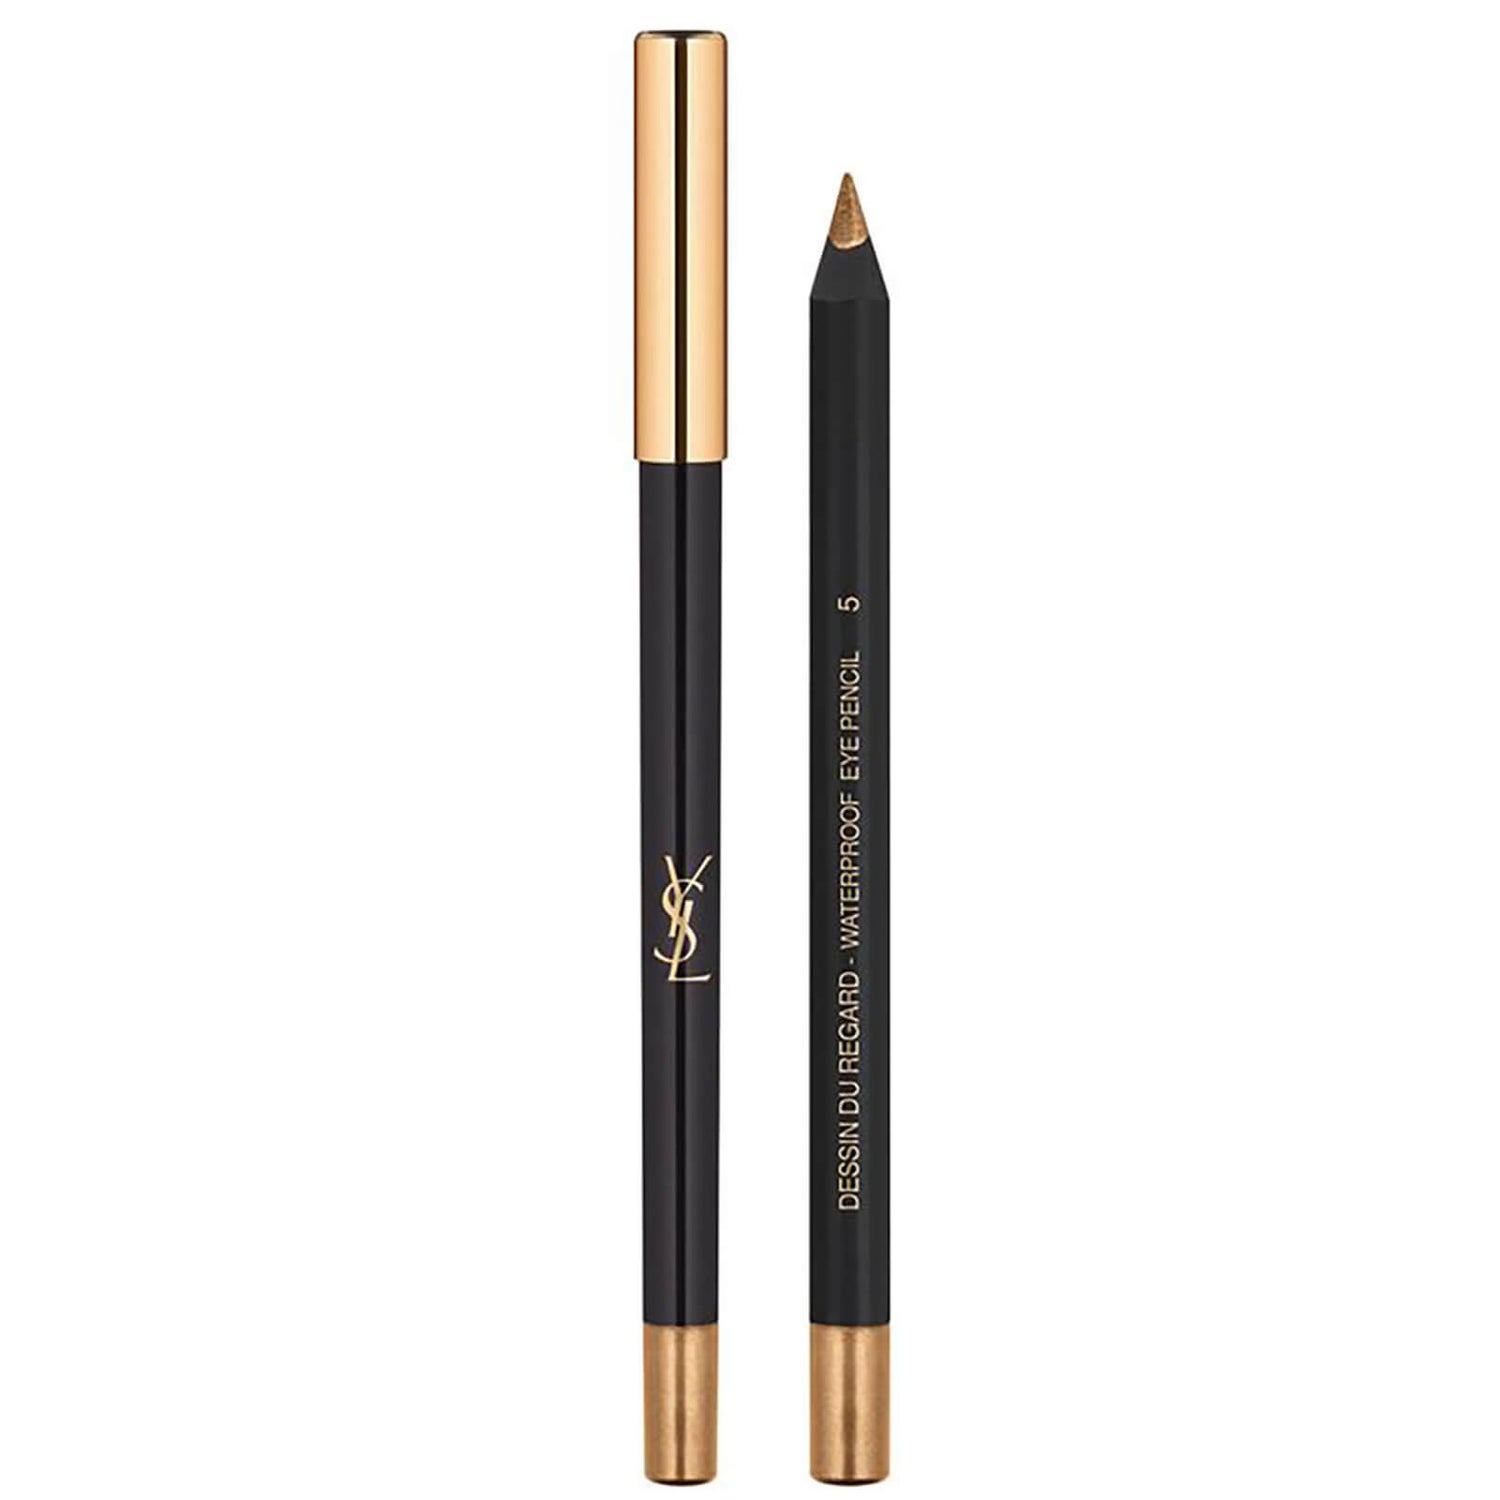 Yves Saint Laurent Dessin Du Regard Waterproof Eye Pencil (olika nyanser)